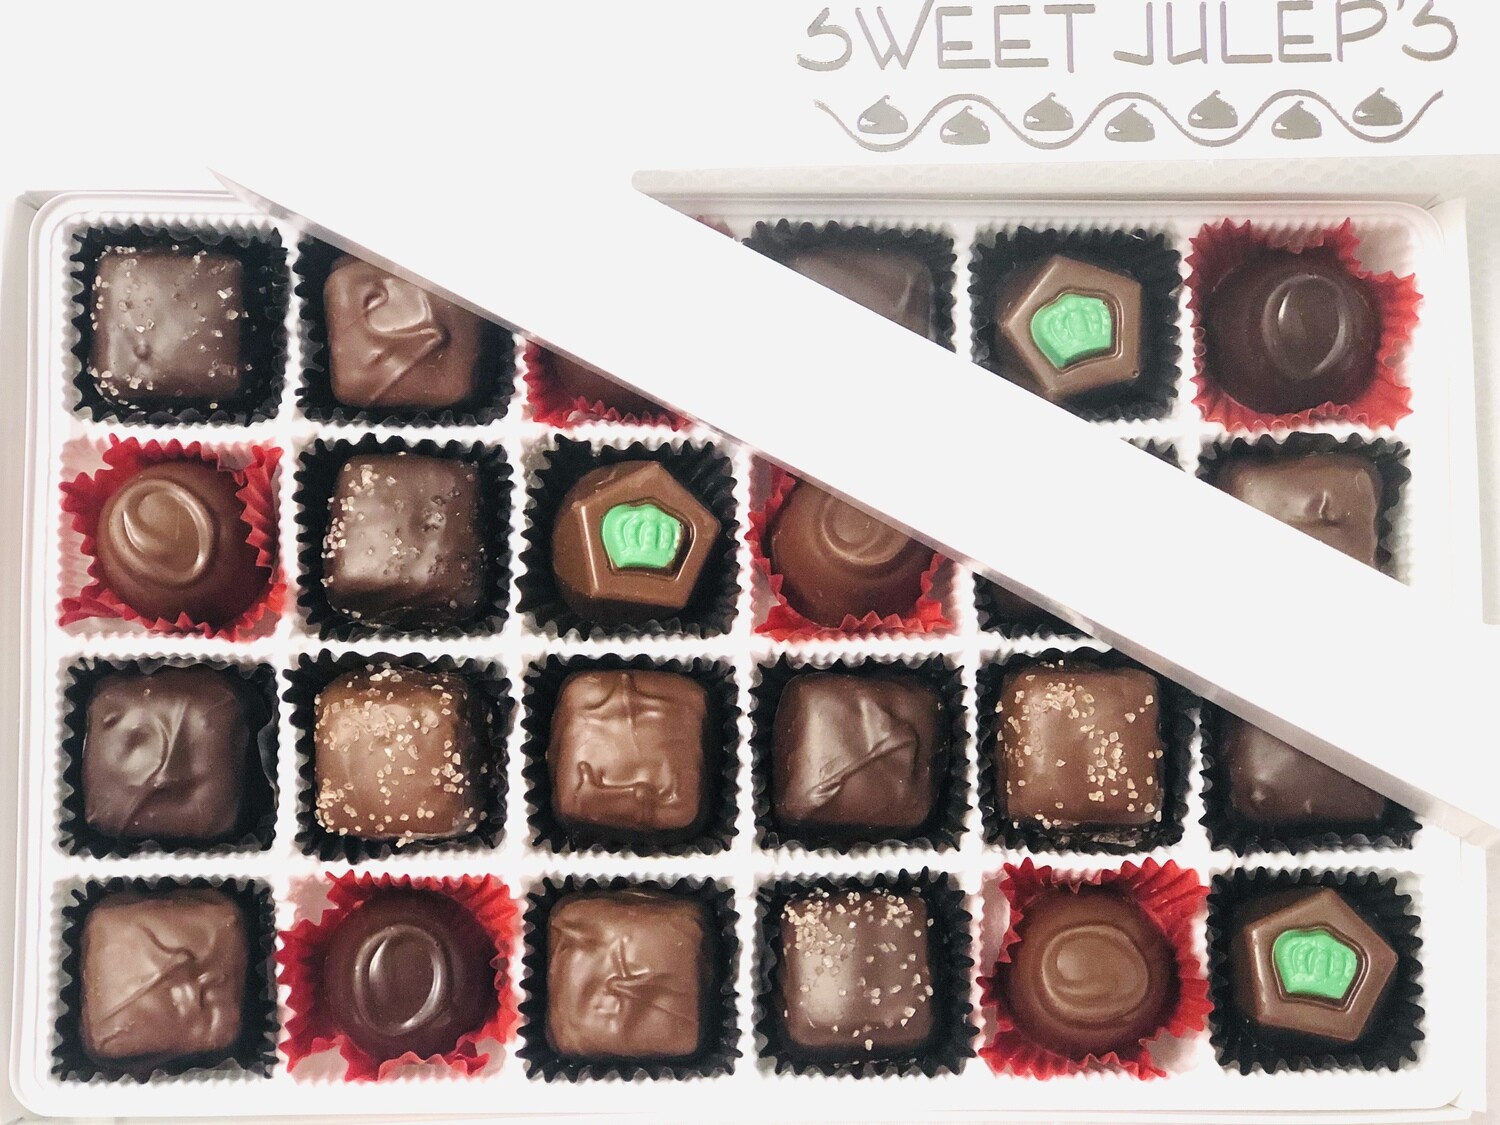 SUGAR FREE - 1 Pound Box of Assorted Chocolates